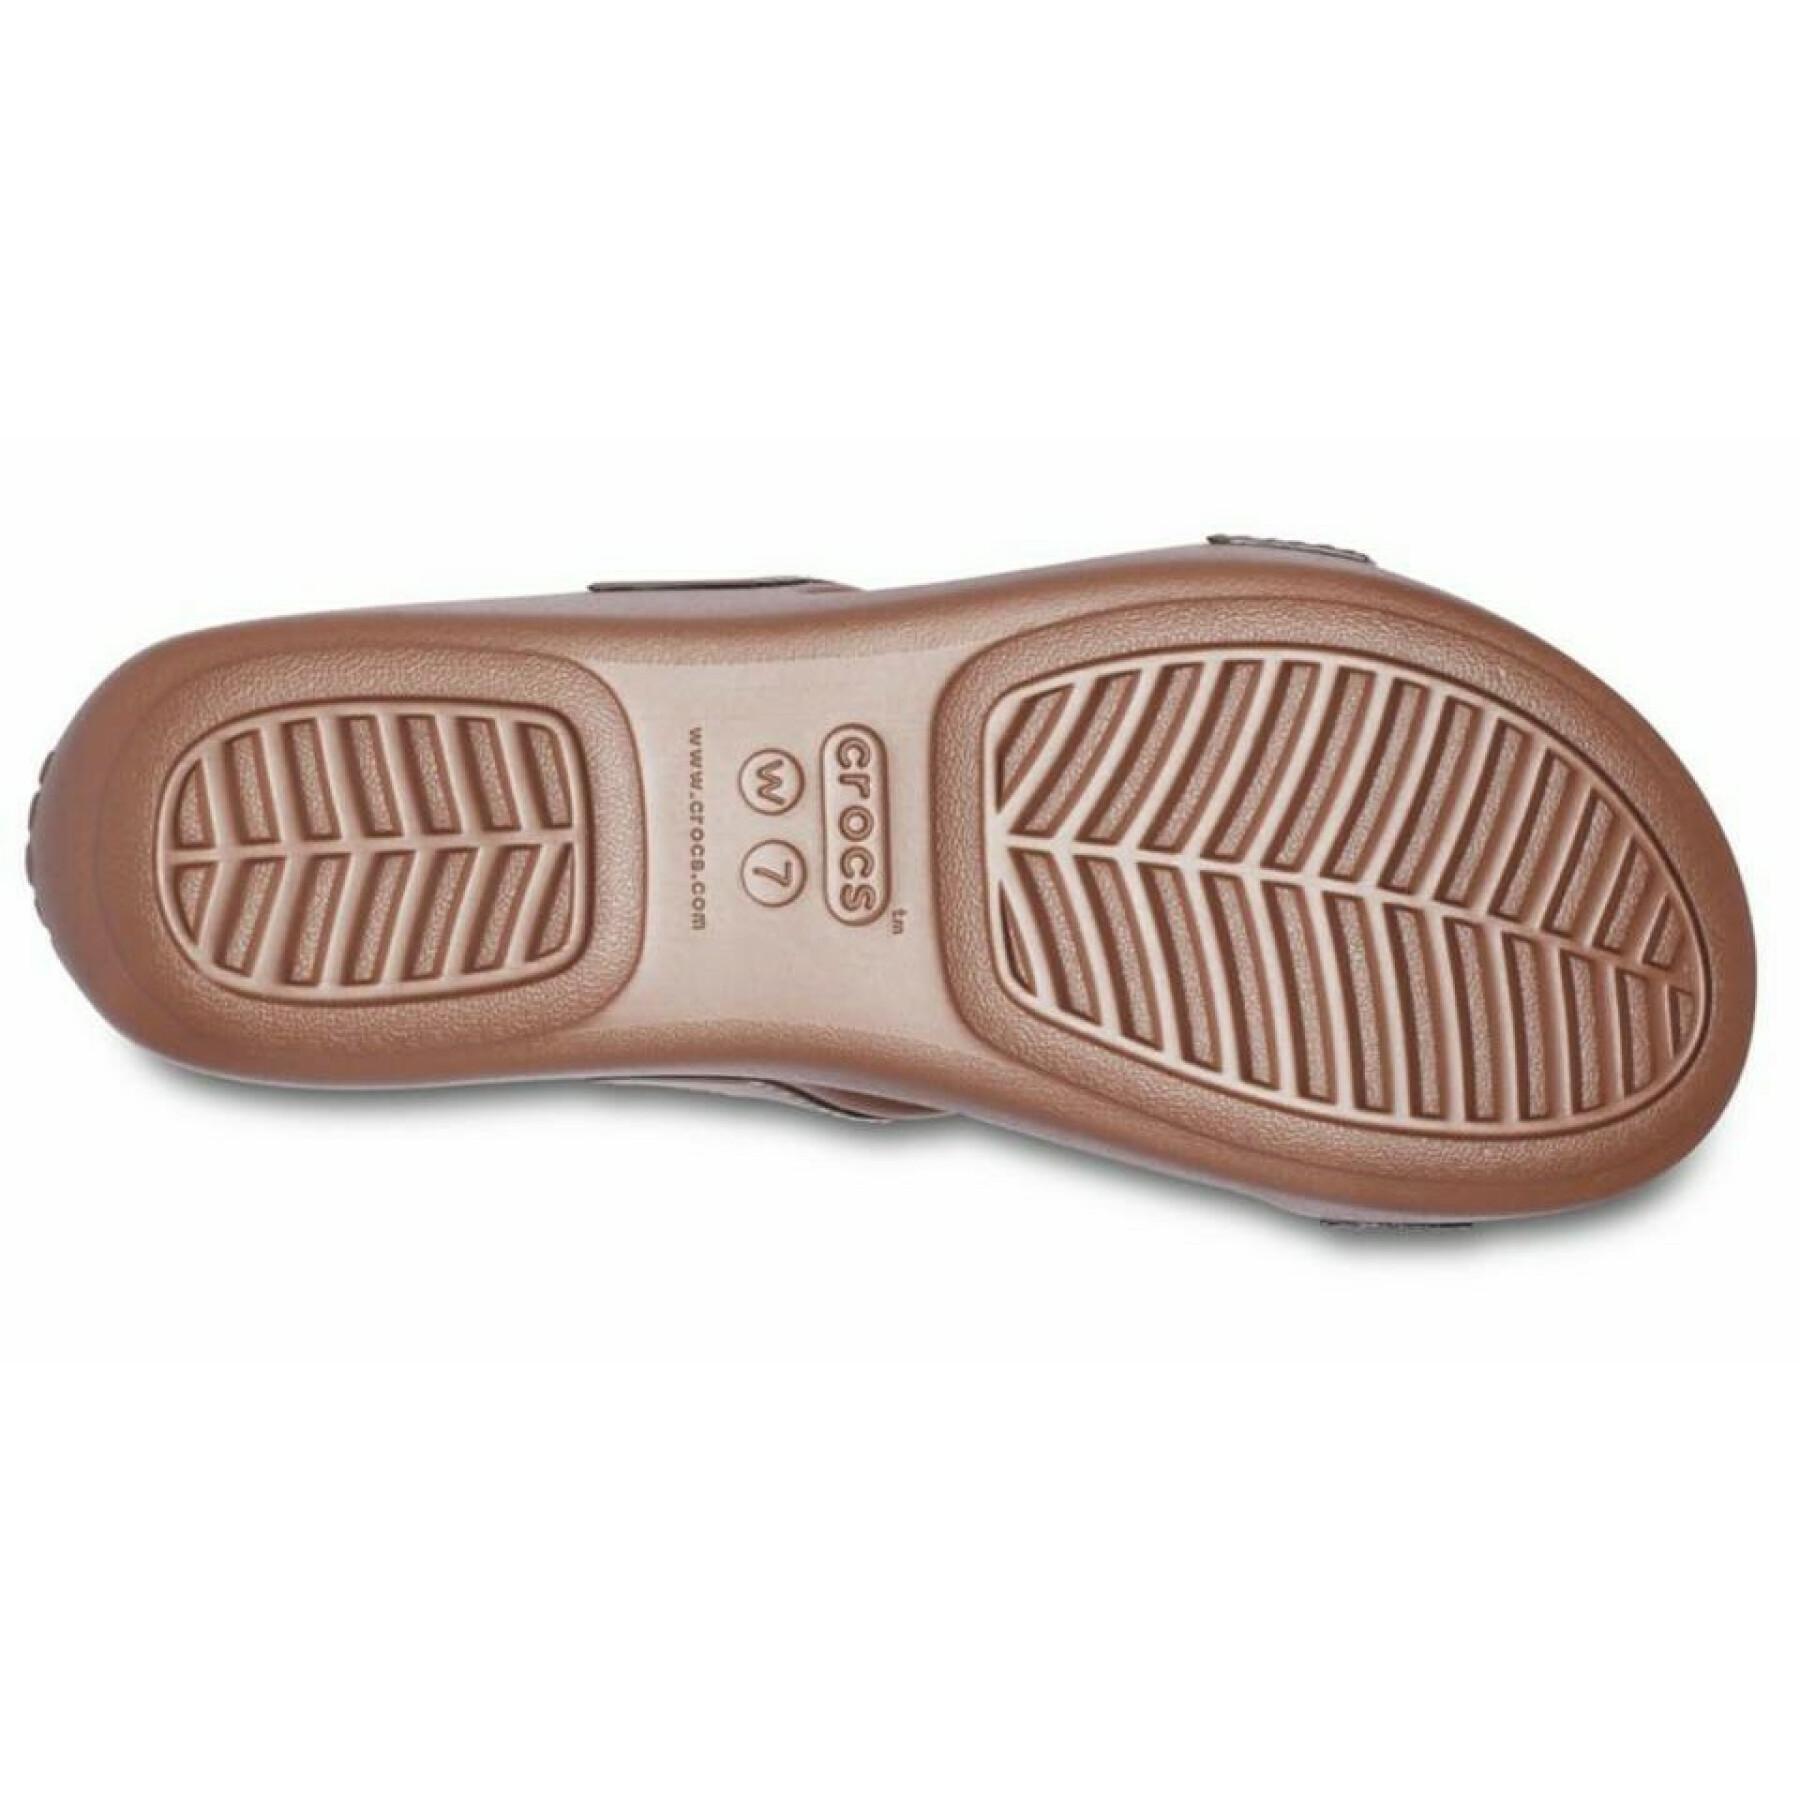 Sandálias femininas Crocs Monterey Metallic SOW dg